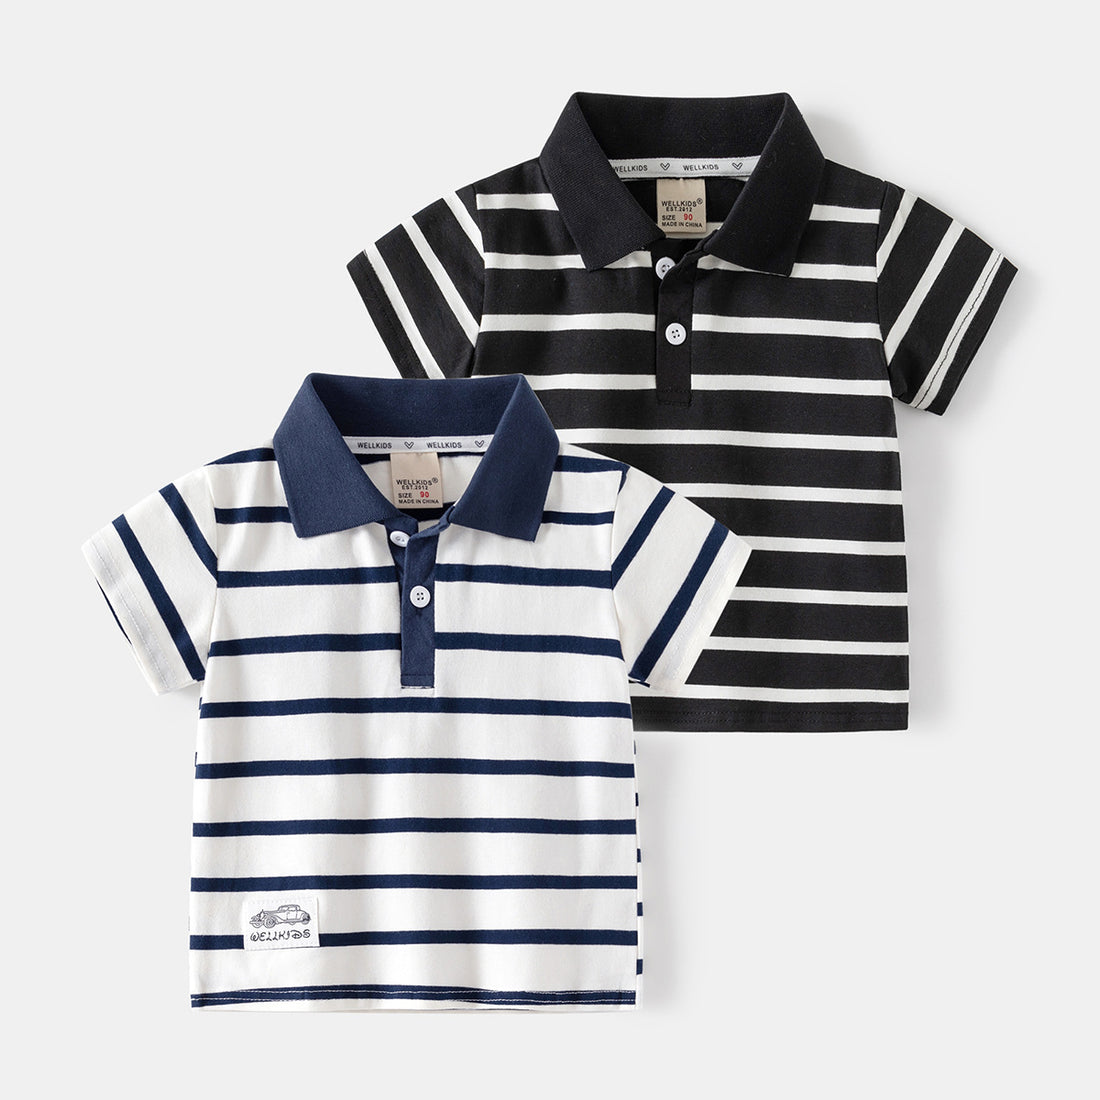 [5131082] - Baju Atasan Kaos Polo Kerah Fashion Import Anak Laki-Laki - Motif Cool Lines